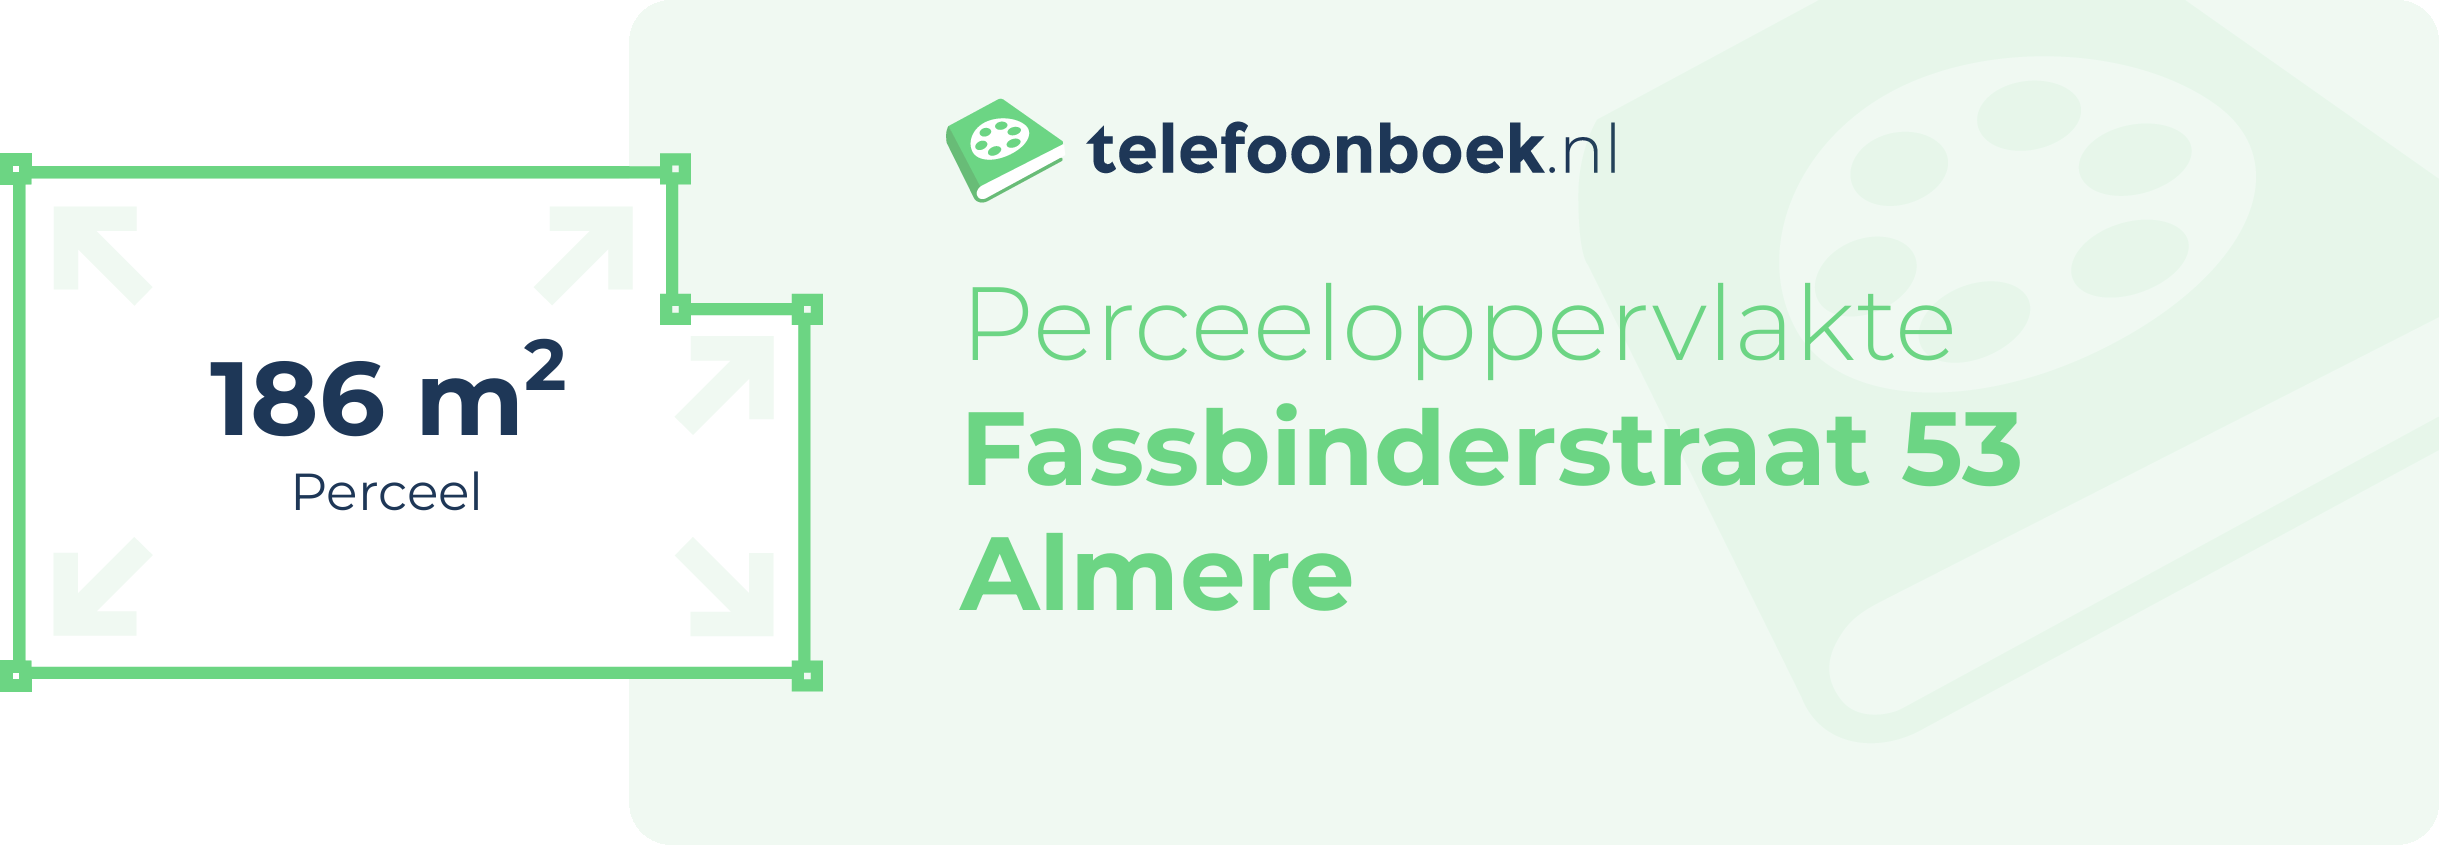 Perceeloppervlakte Fassbinderstraat 53 Almere